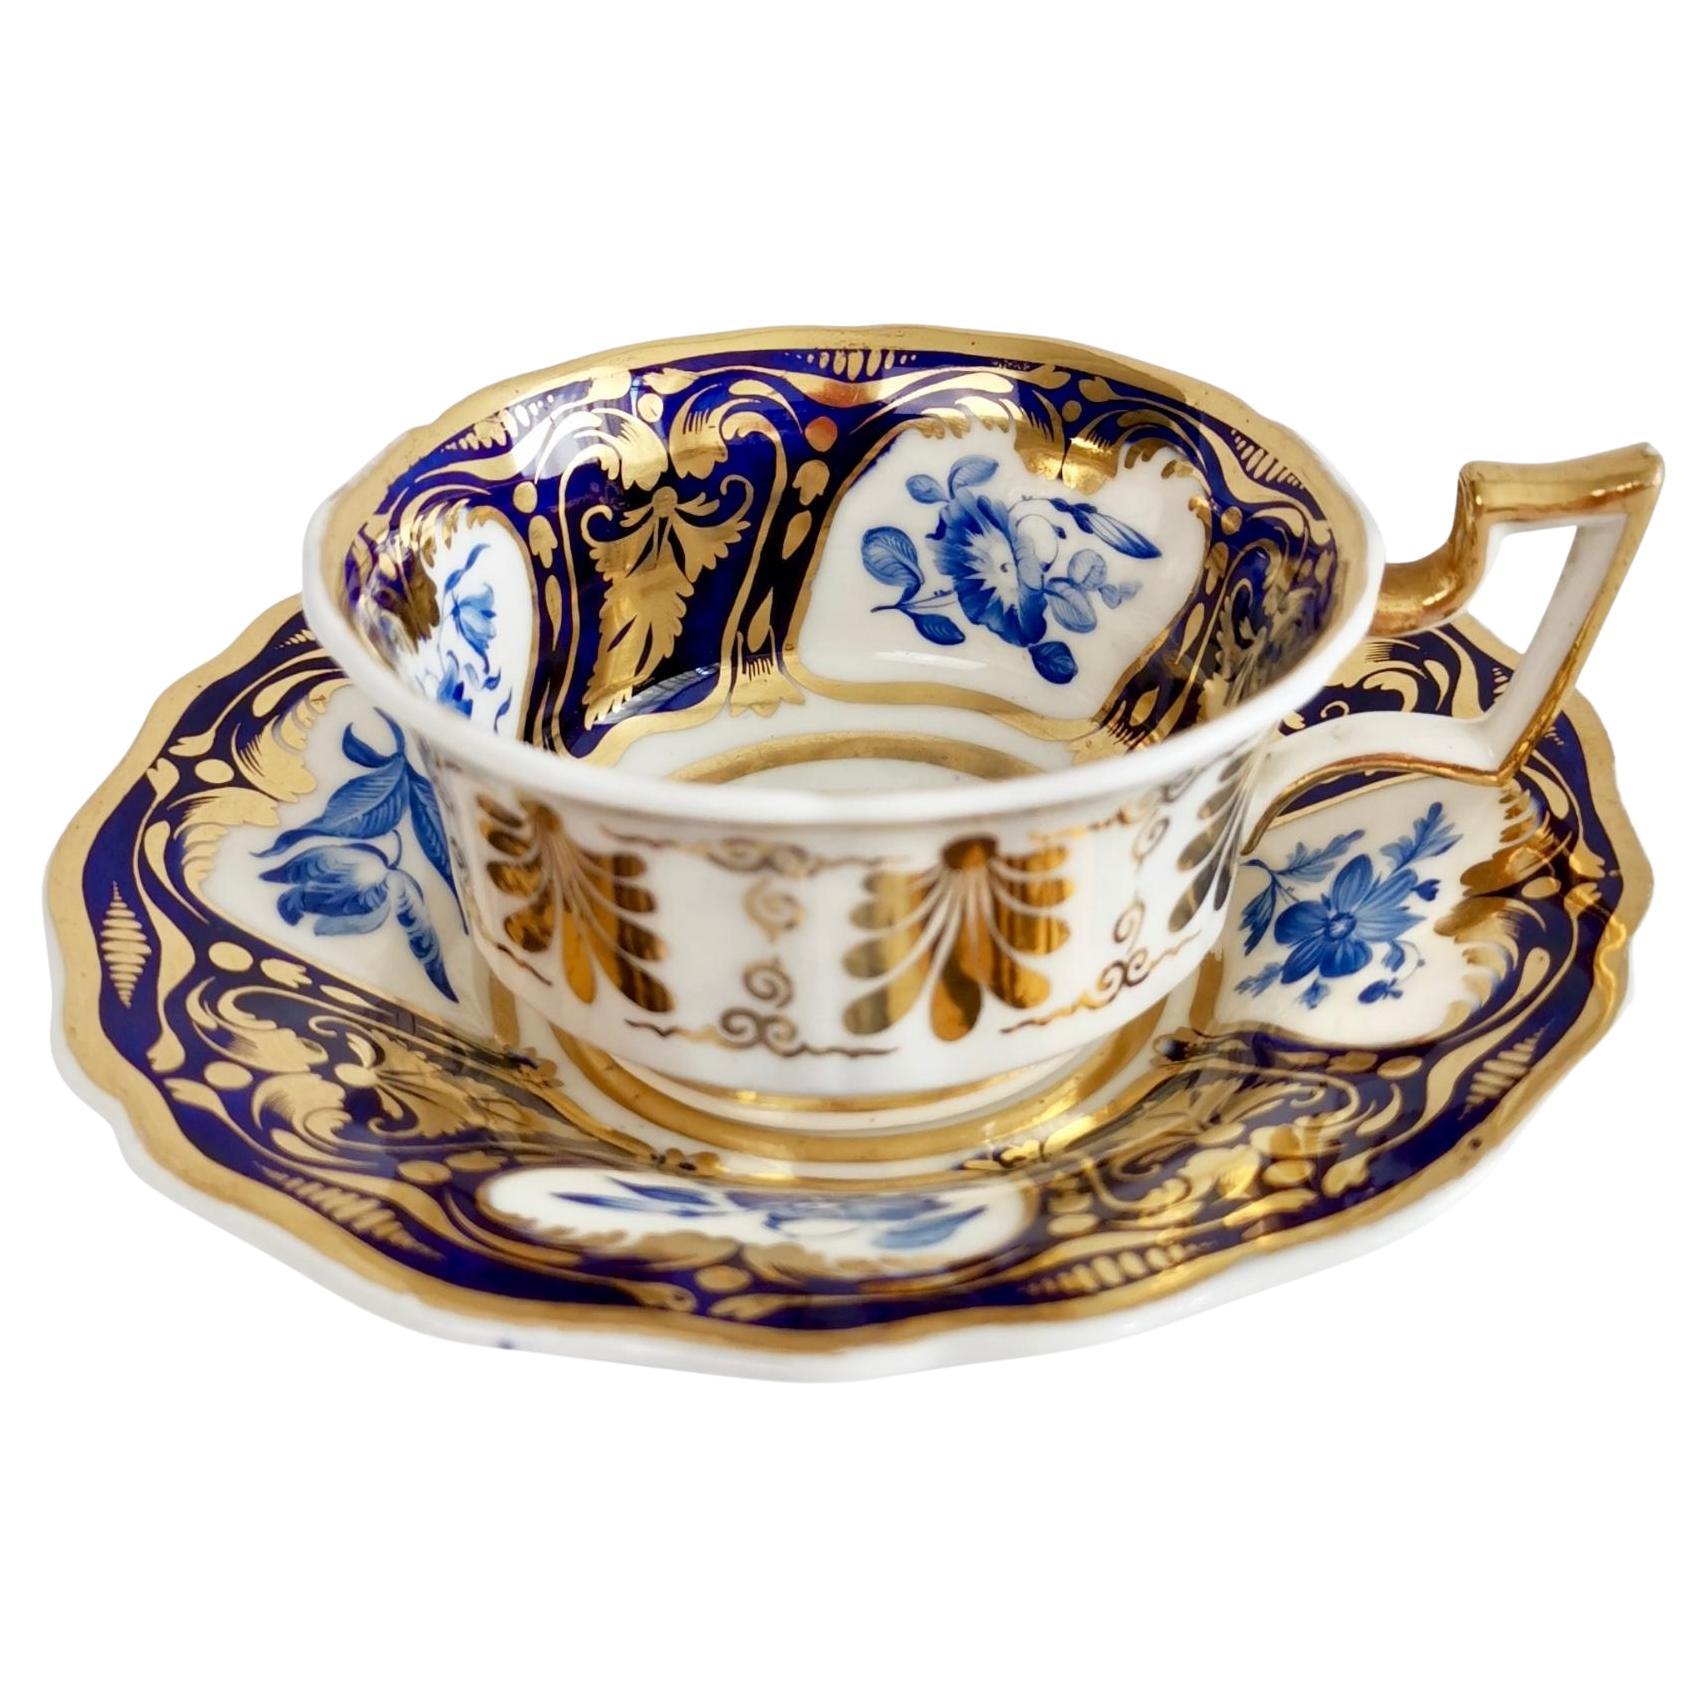 Ridgway Teacup and Saucer, Blue and Gilt, Flowers Patt. 2/1000, Regency ca 1825